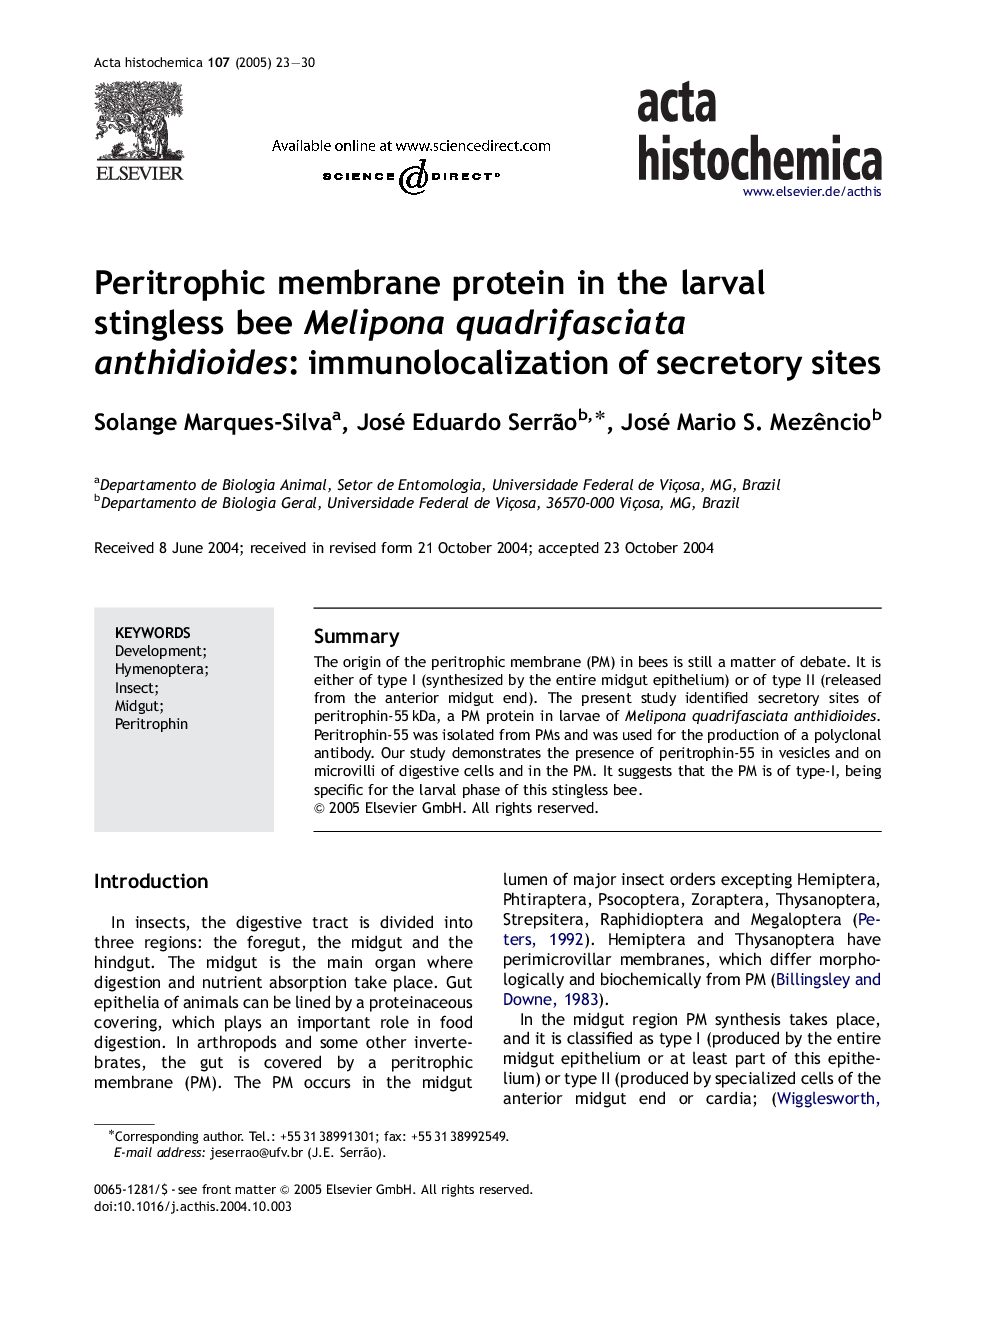 Peritrophic membrane protein in the larval stingless bee Melipona quadrifasciata anthidioides: immunolocalization of secretory sites